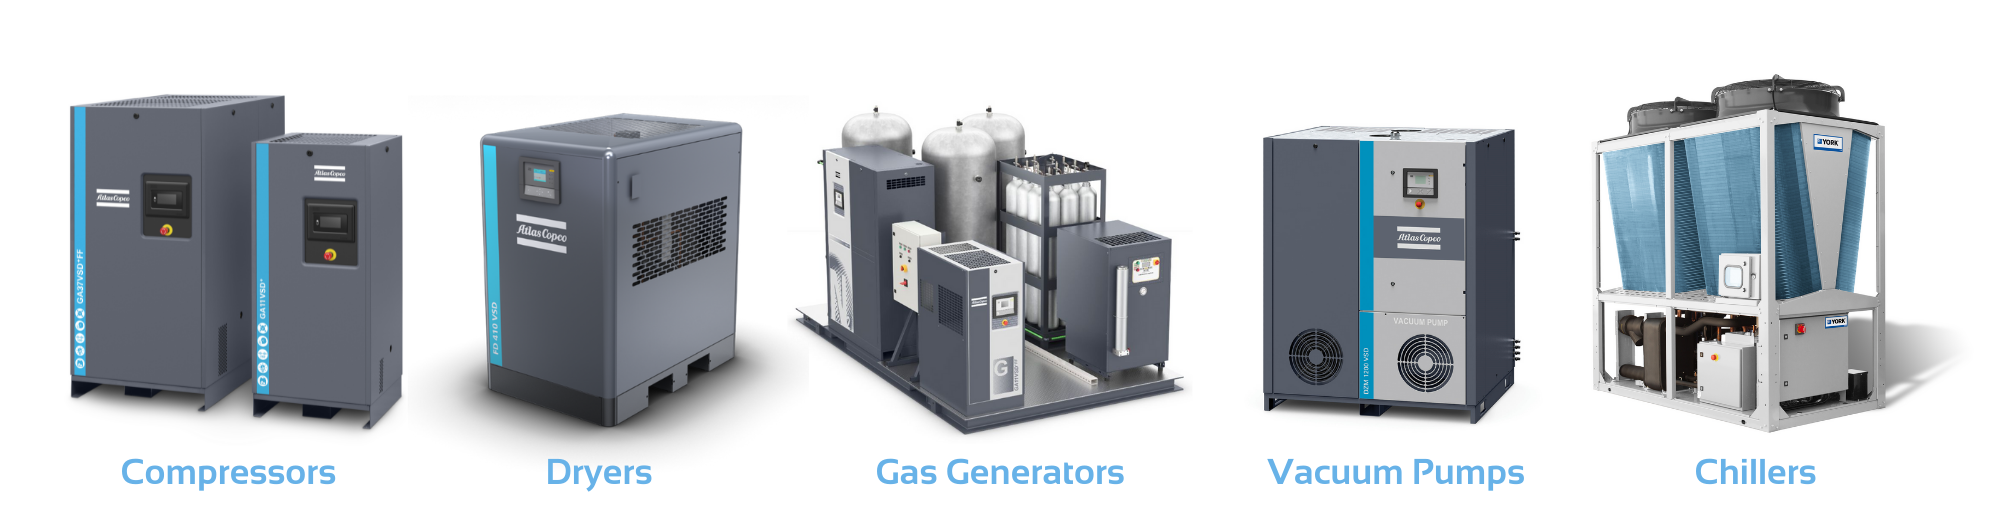 compressor, dryer, gas generator, vacuum pump, chiller